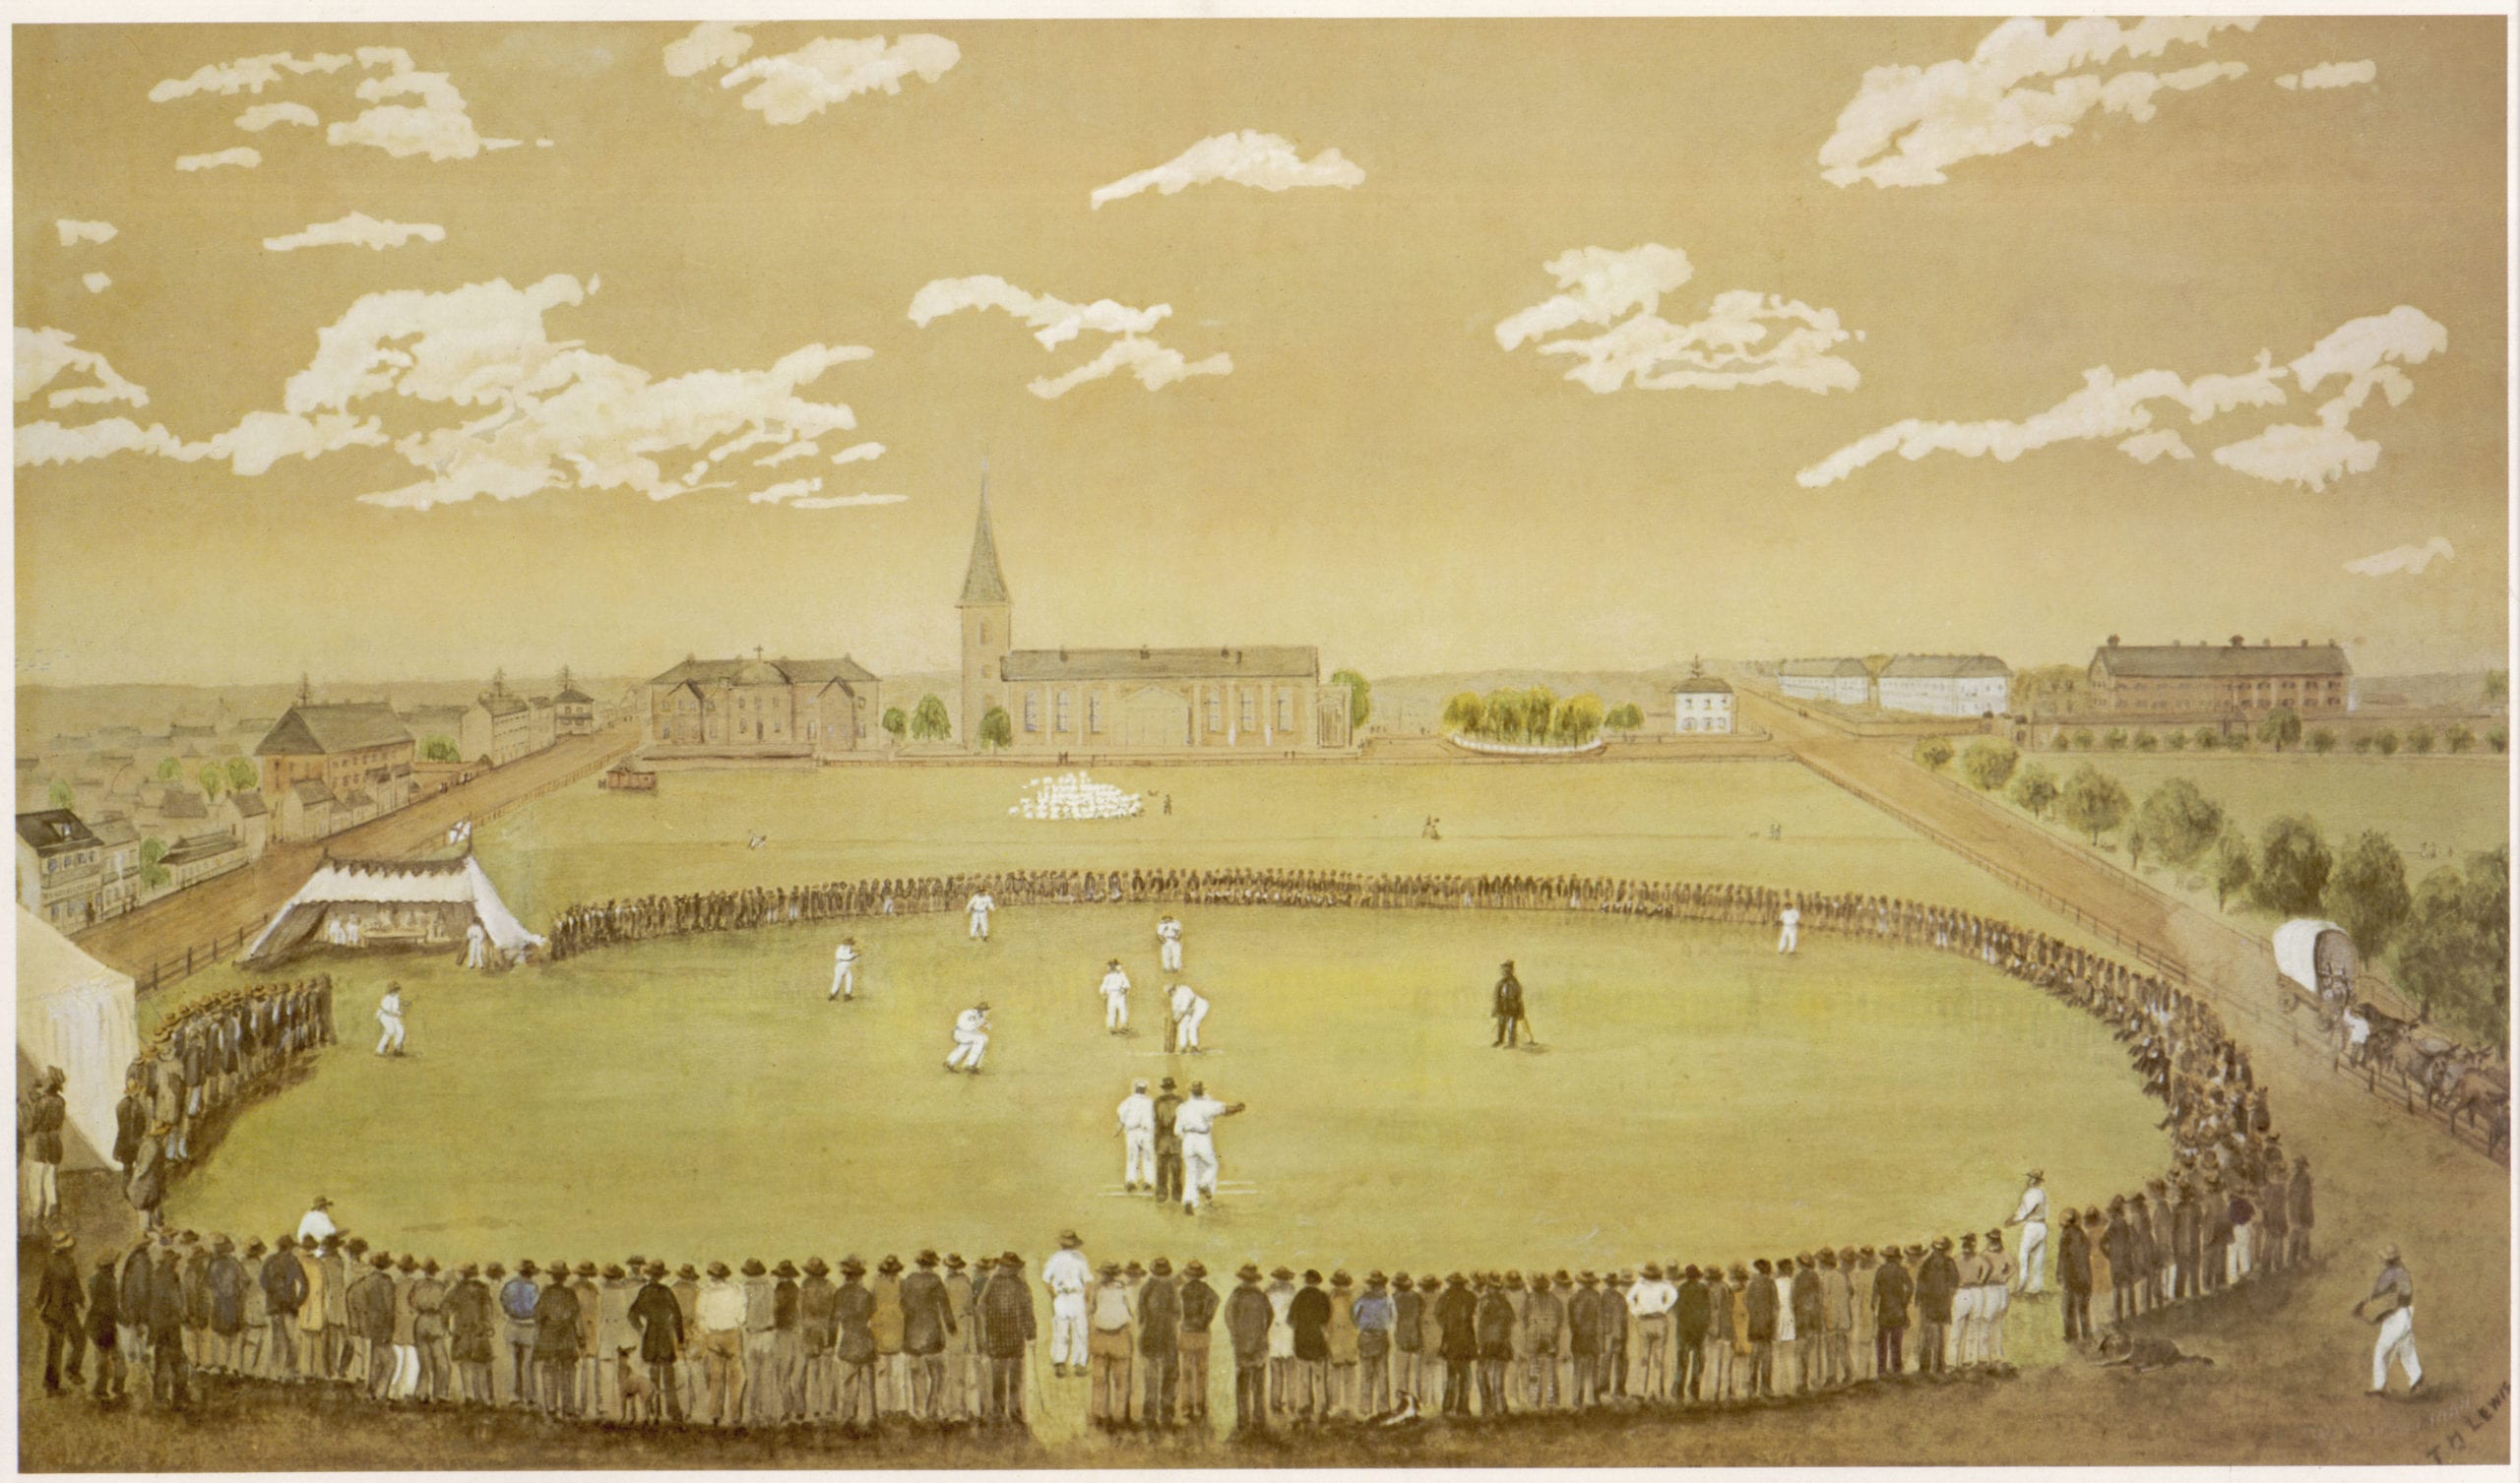 Cricket in Sydney, Australia circa 1842